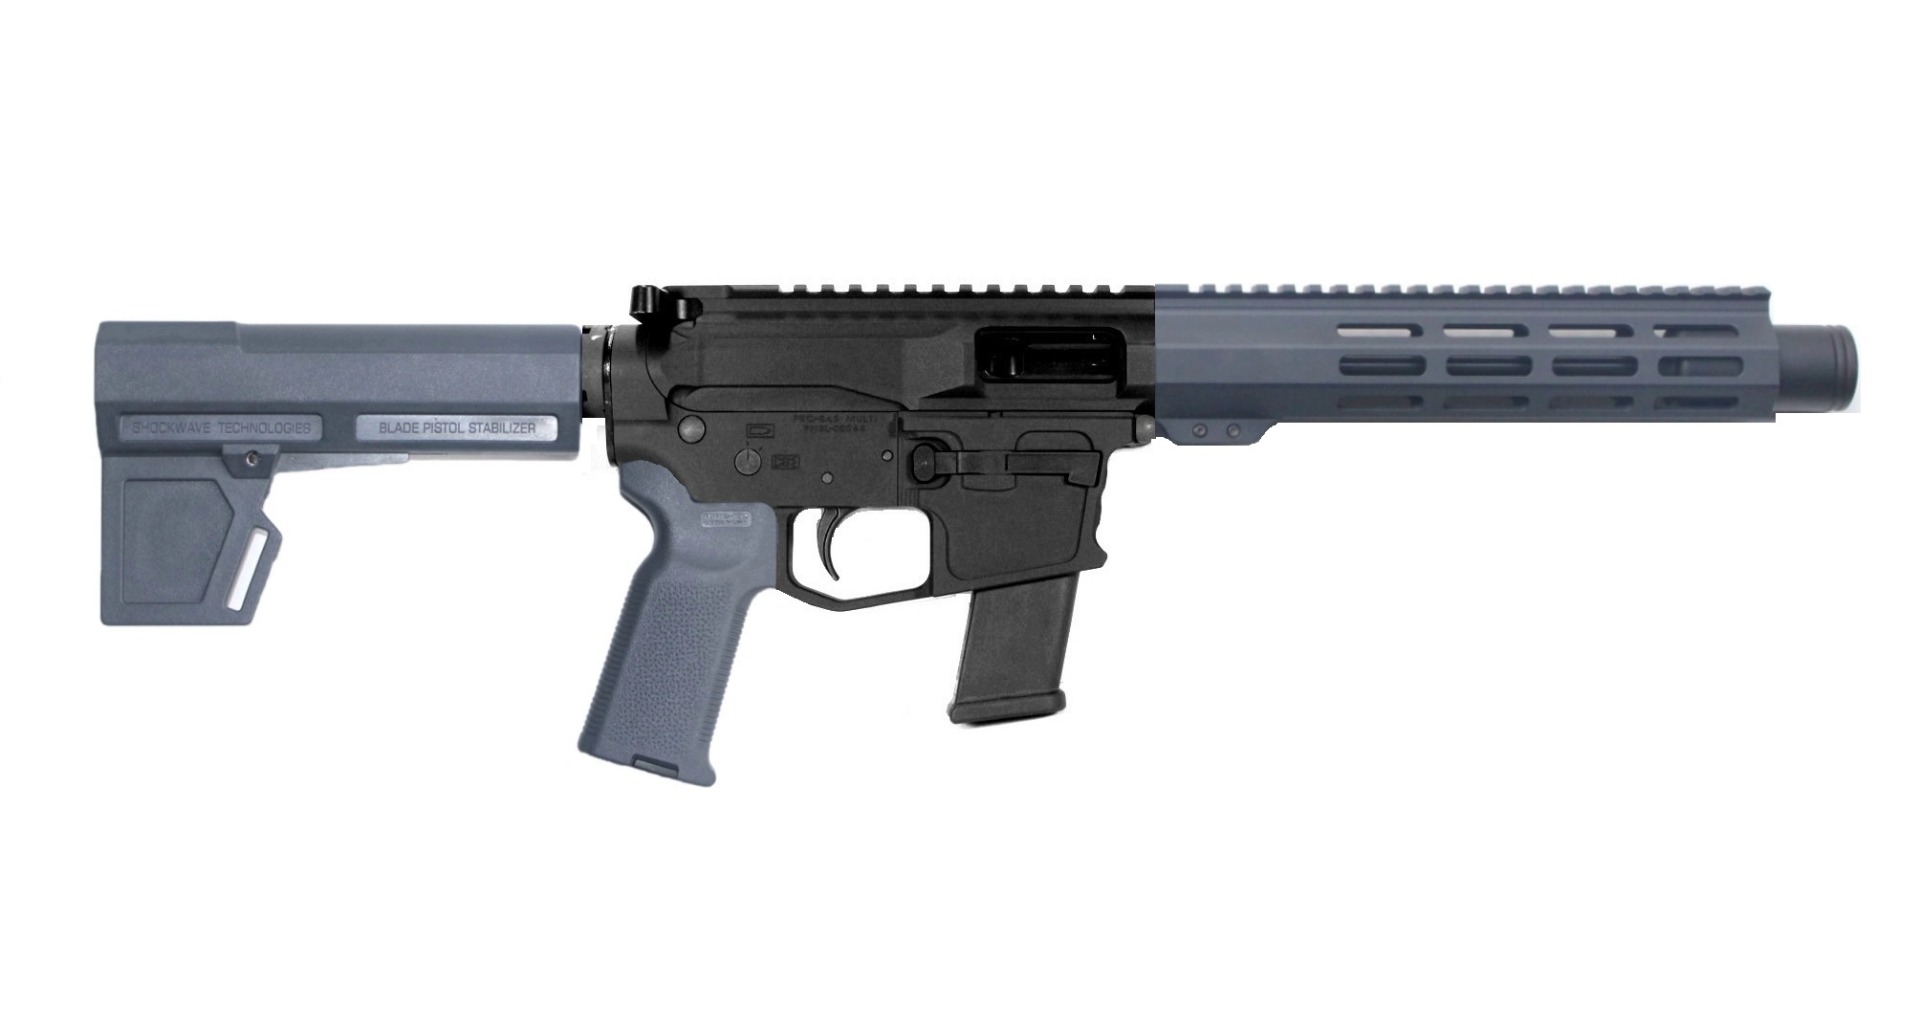 P2A PATRIOT 8.5" 40 S&W 1/16 Pistol Caliber Melonite M-LOK Pistol with Flash Can - BLK/GRAY